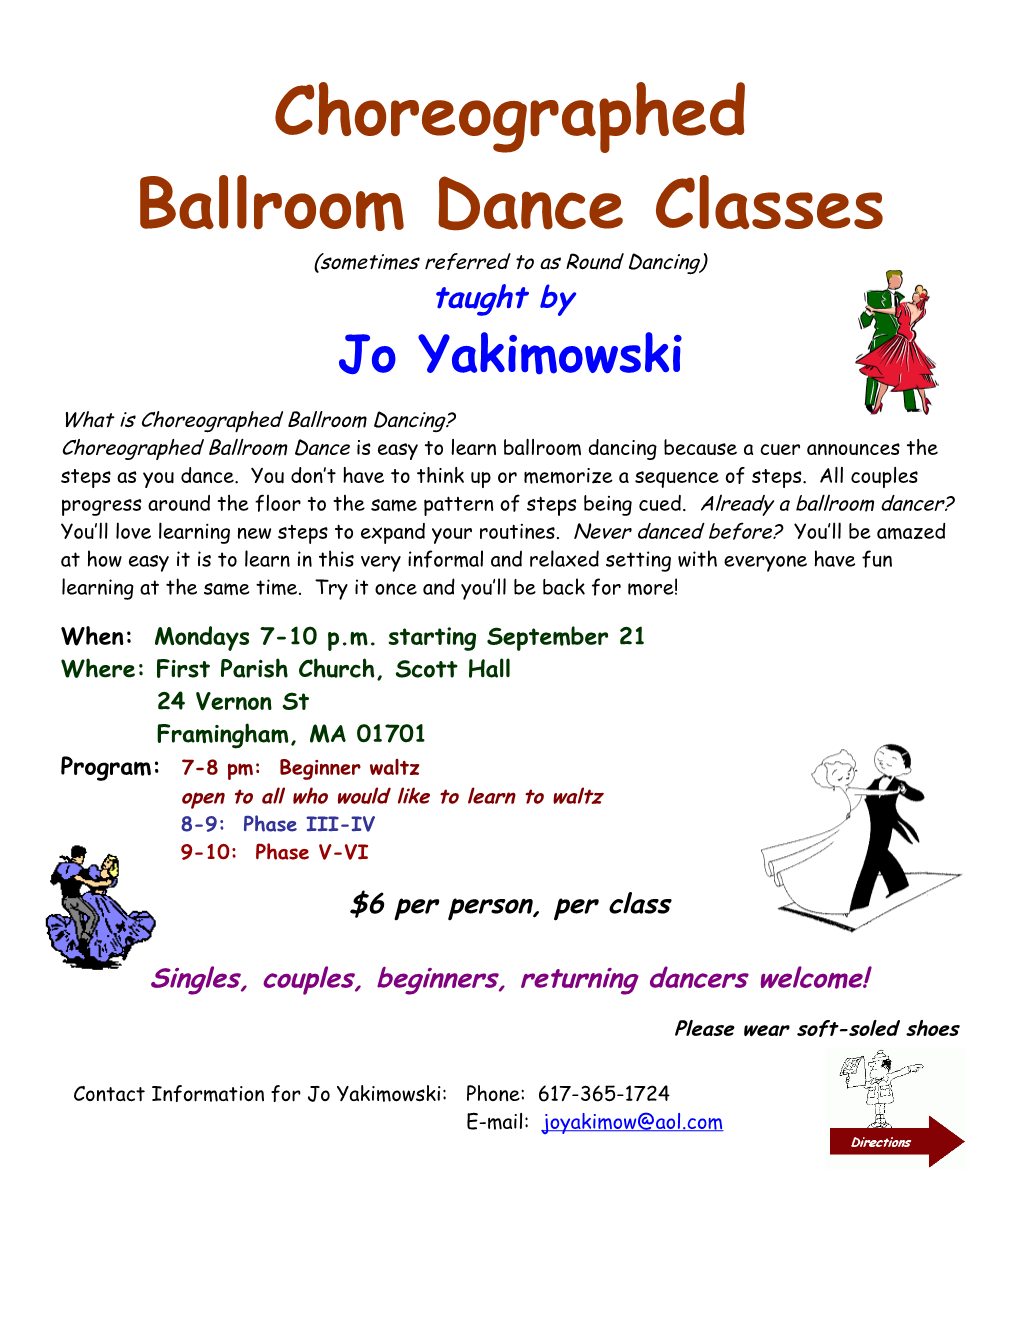 Choreographed Ballroom Dance Classes